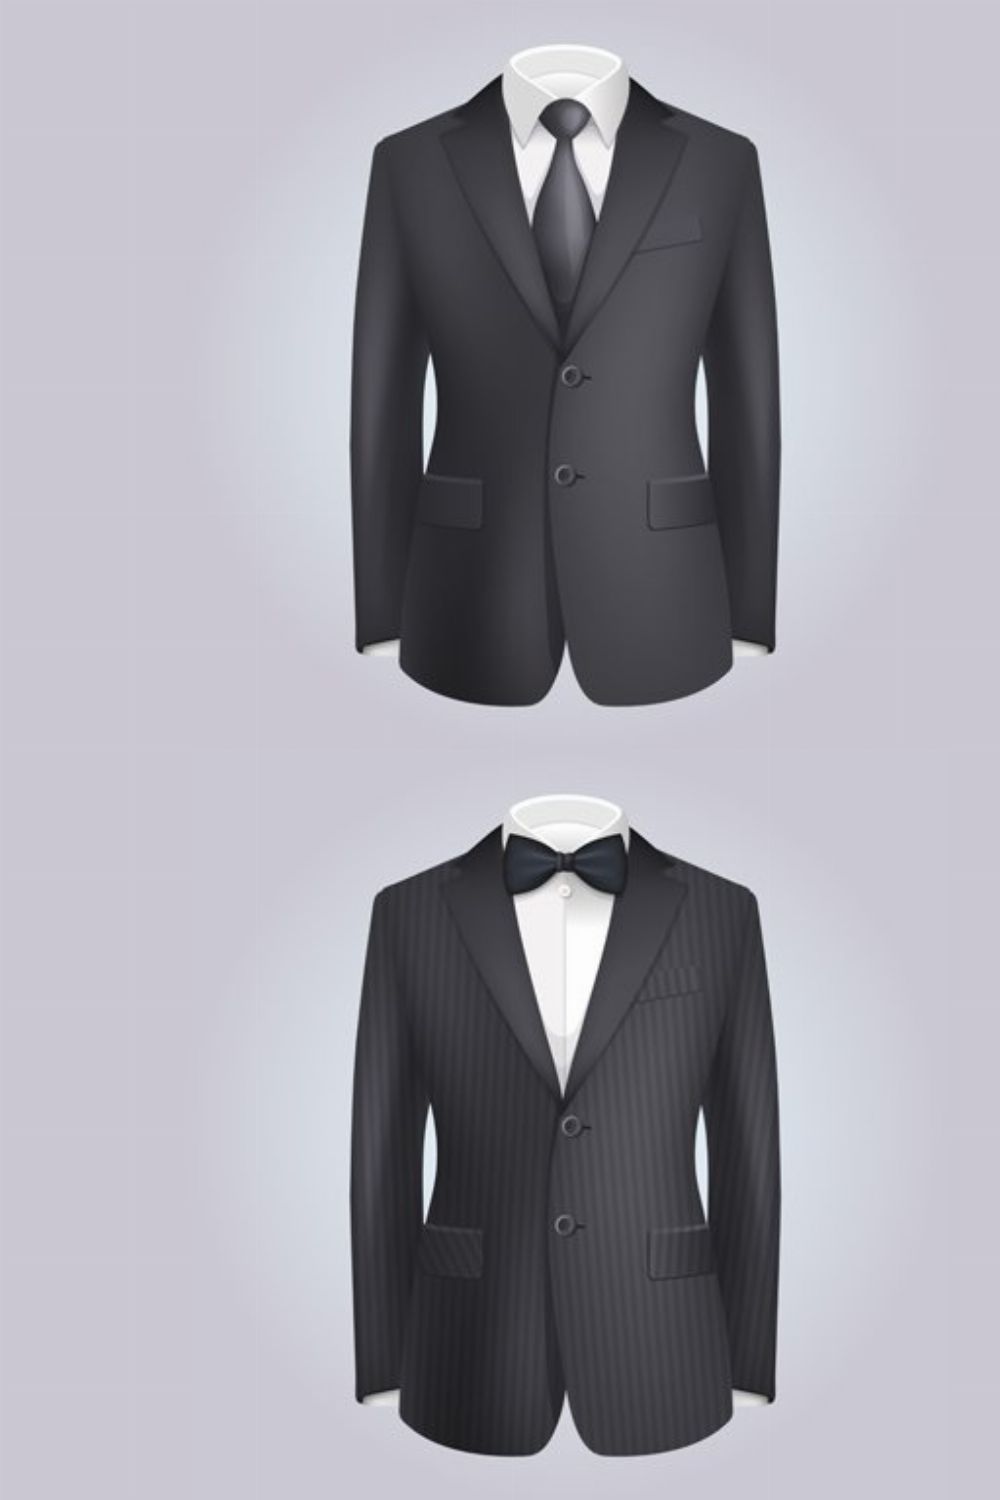 Male Clothing Dark Suit Set pinterest preview image.